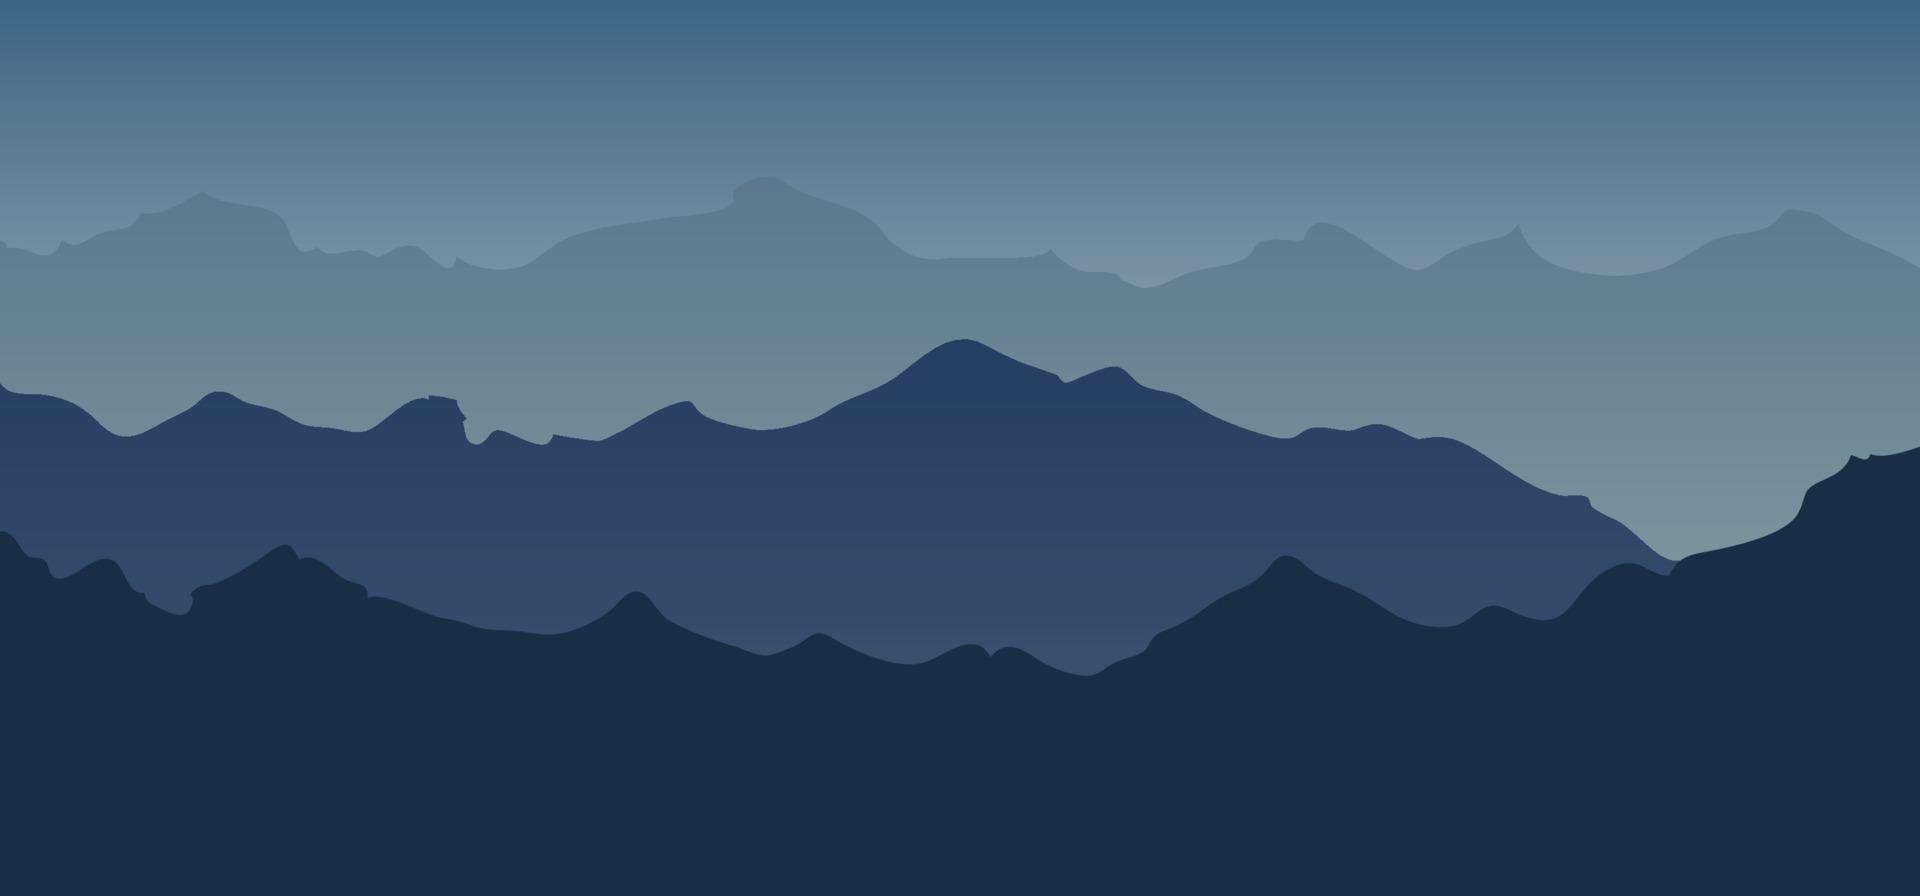 Mountain landscape view blue tone silhouette background 2008934